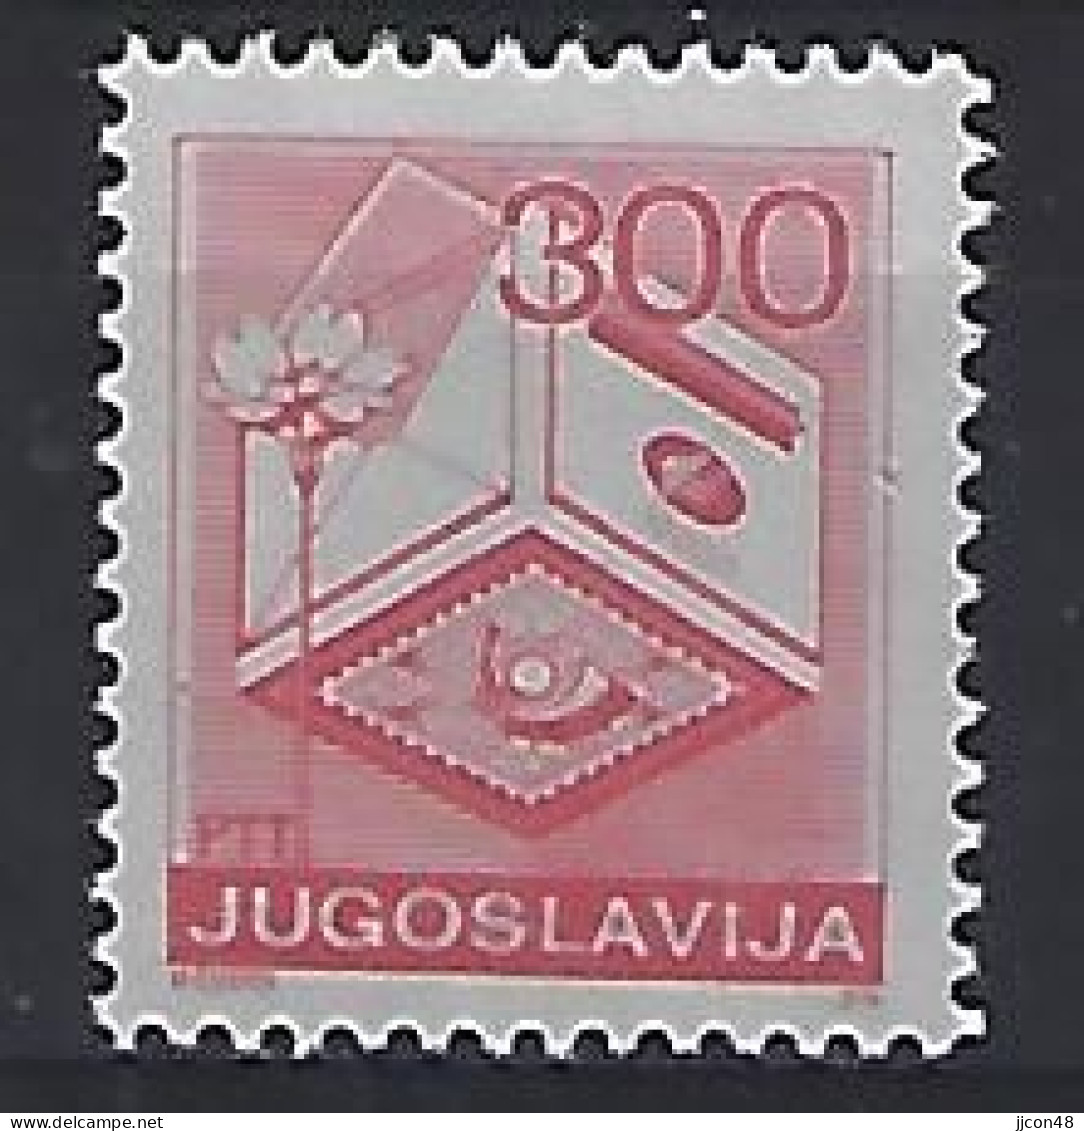 Jugoslavia 1989   (**) MNH  Mi.2342 C - Unused Stamps